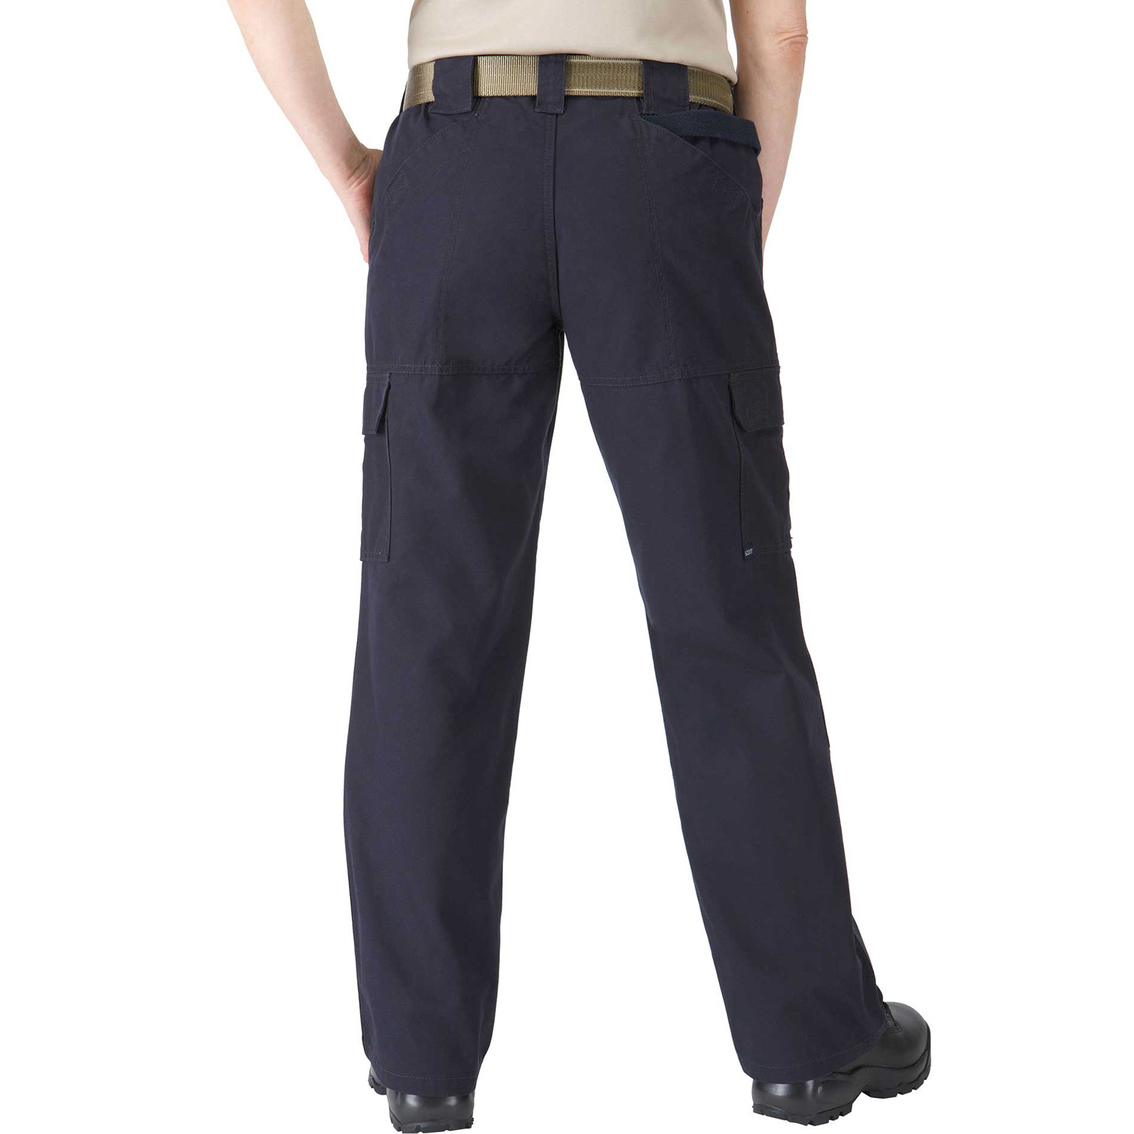 5.11 Women's Tactical Pants - Image 2 of 3